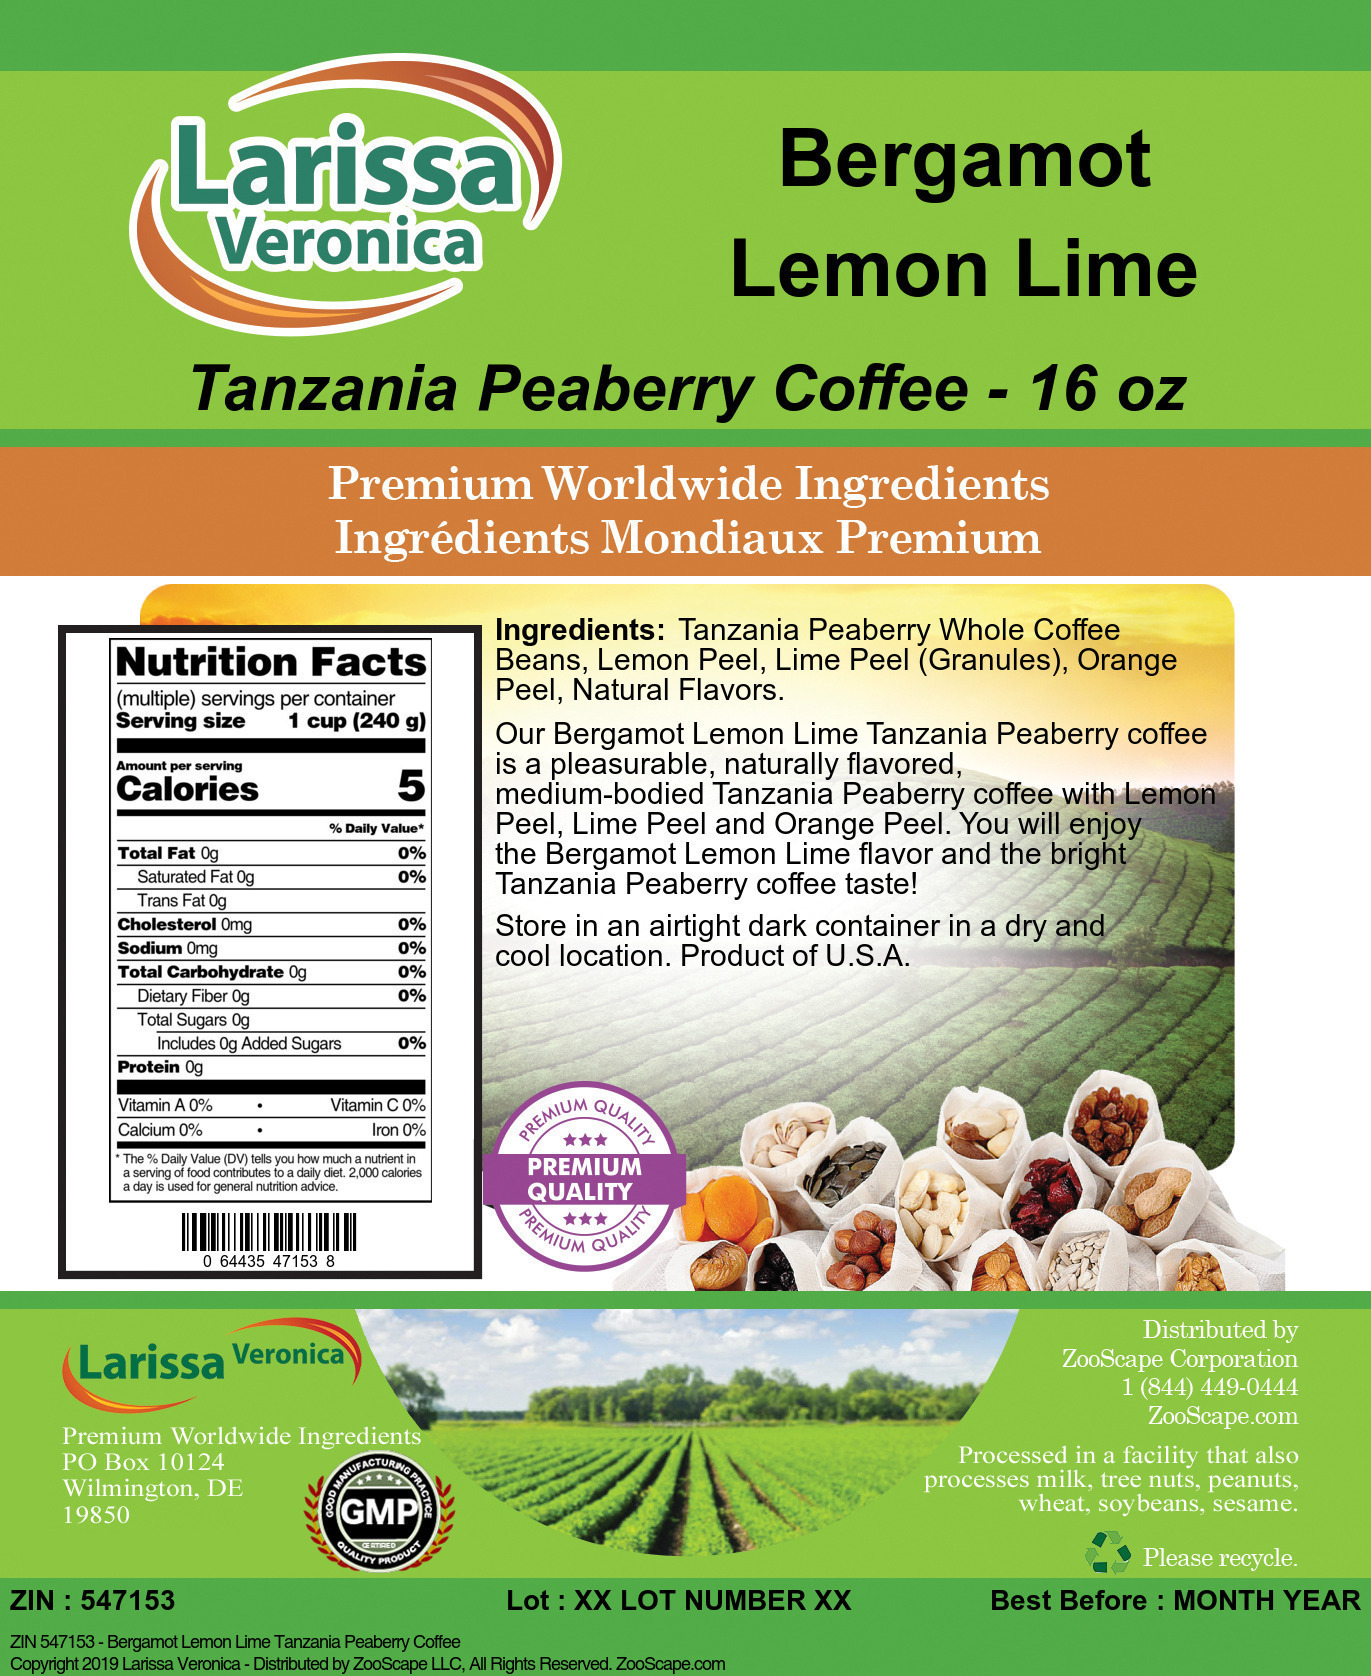 Bergamot Lemon Lime Tanzania Peaberry Coffee - Label